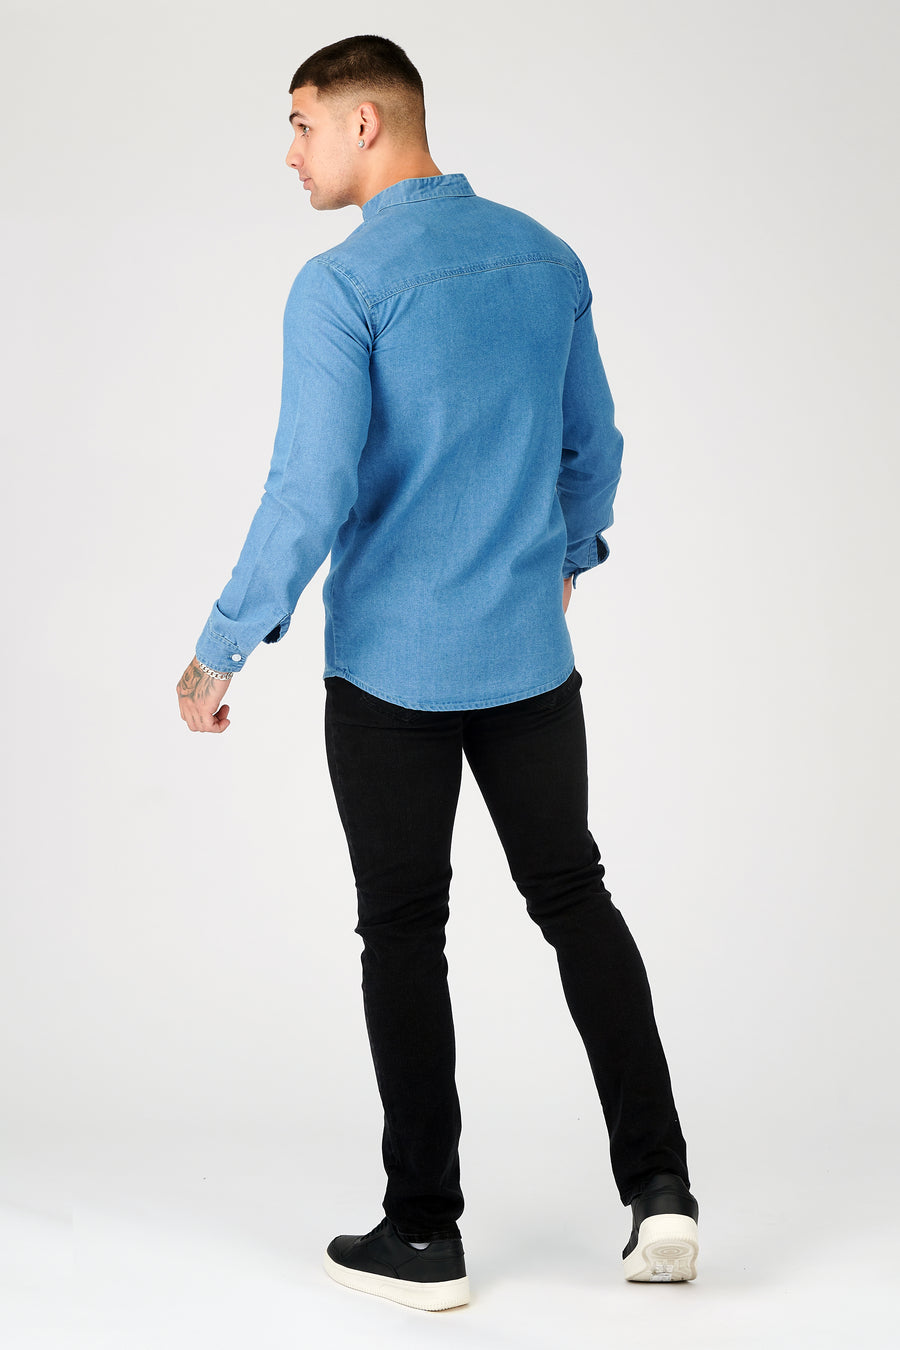 Body back shot of a standing male model wearing a JMOJO Blue Slim Fit Grandad Collar Denim Shirt